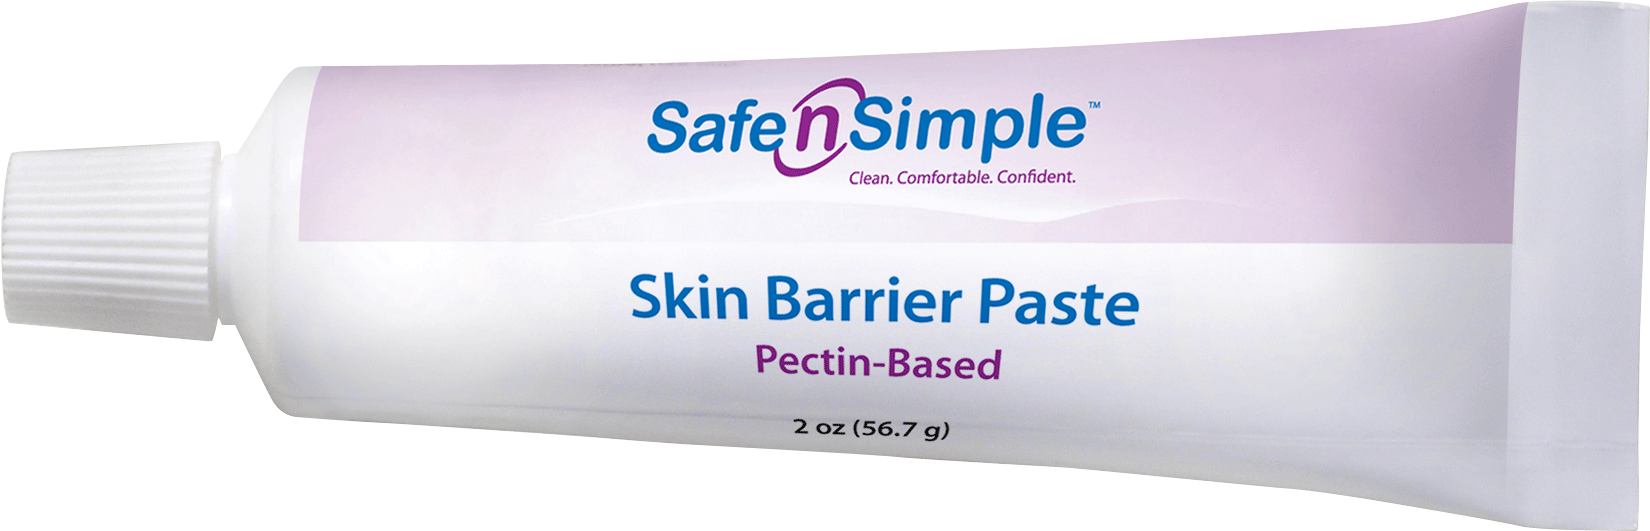 EA/1 - Pectin-Based Skin Barrier Paste, 2 oz.  - Best Buy Medical Supplies